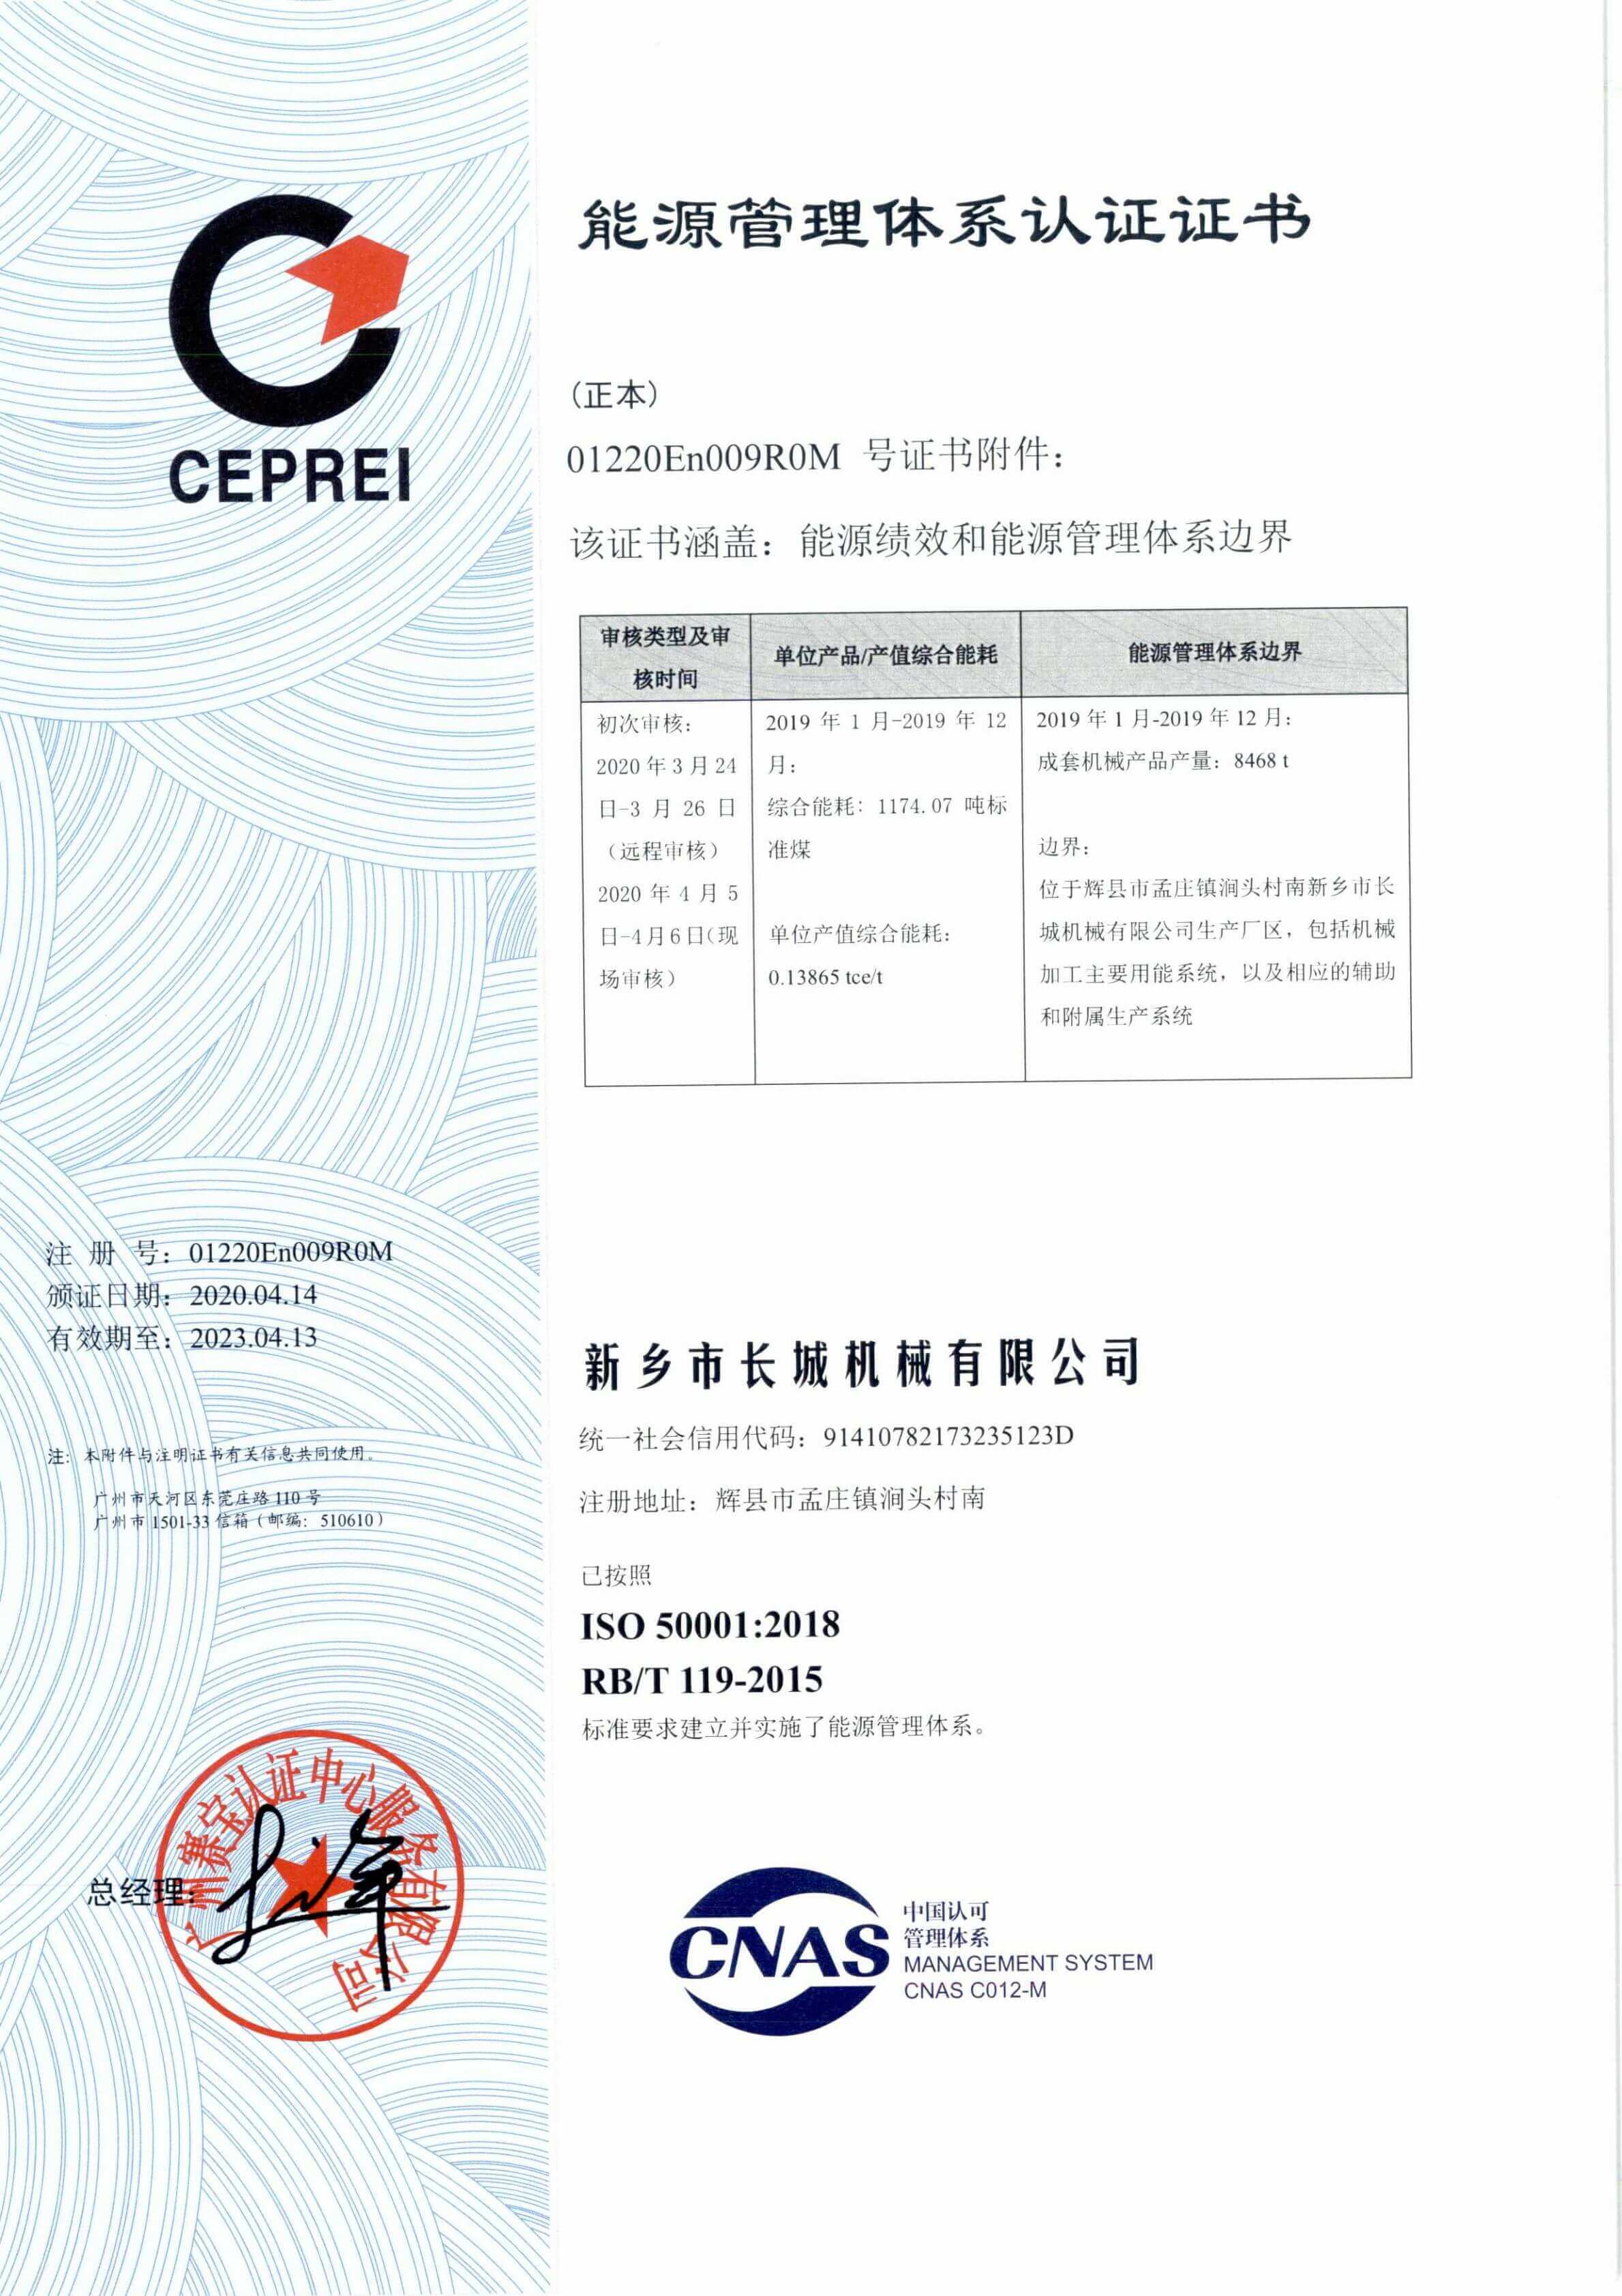 chaeng energy management system certification